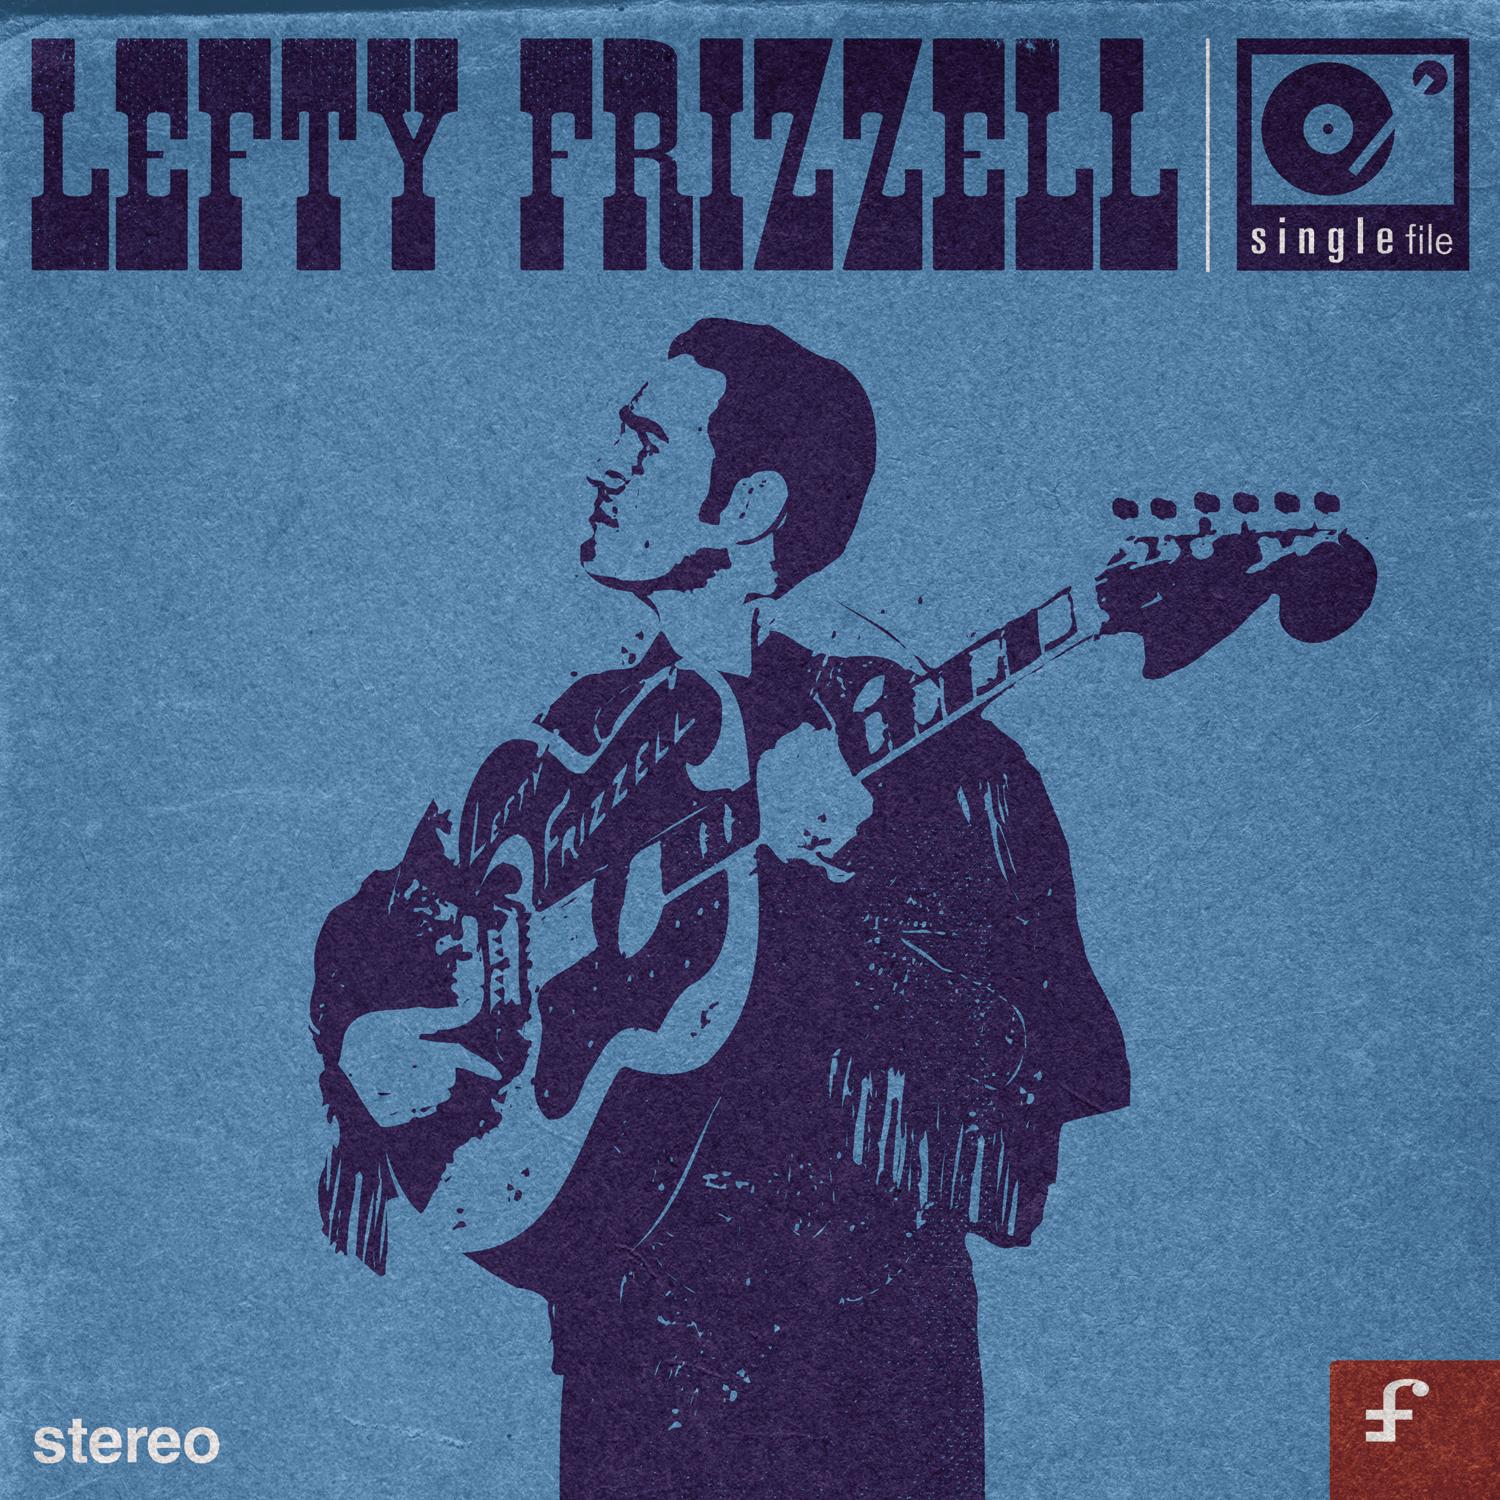 SINGLE FILE: Lefty Frizzell